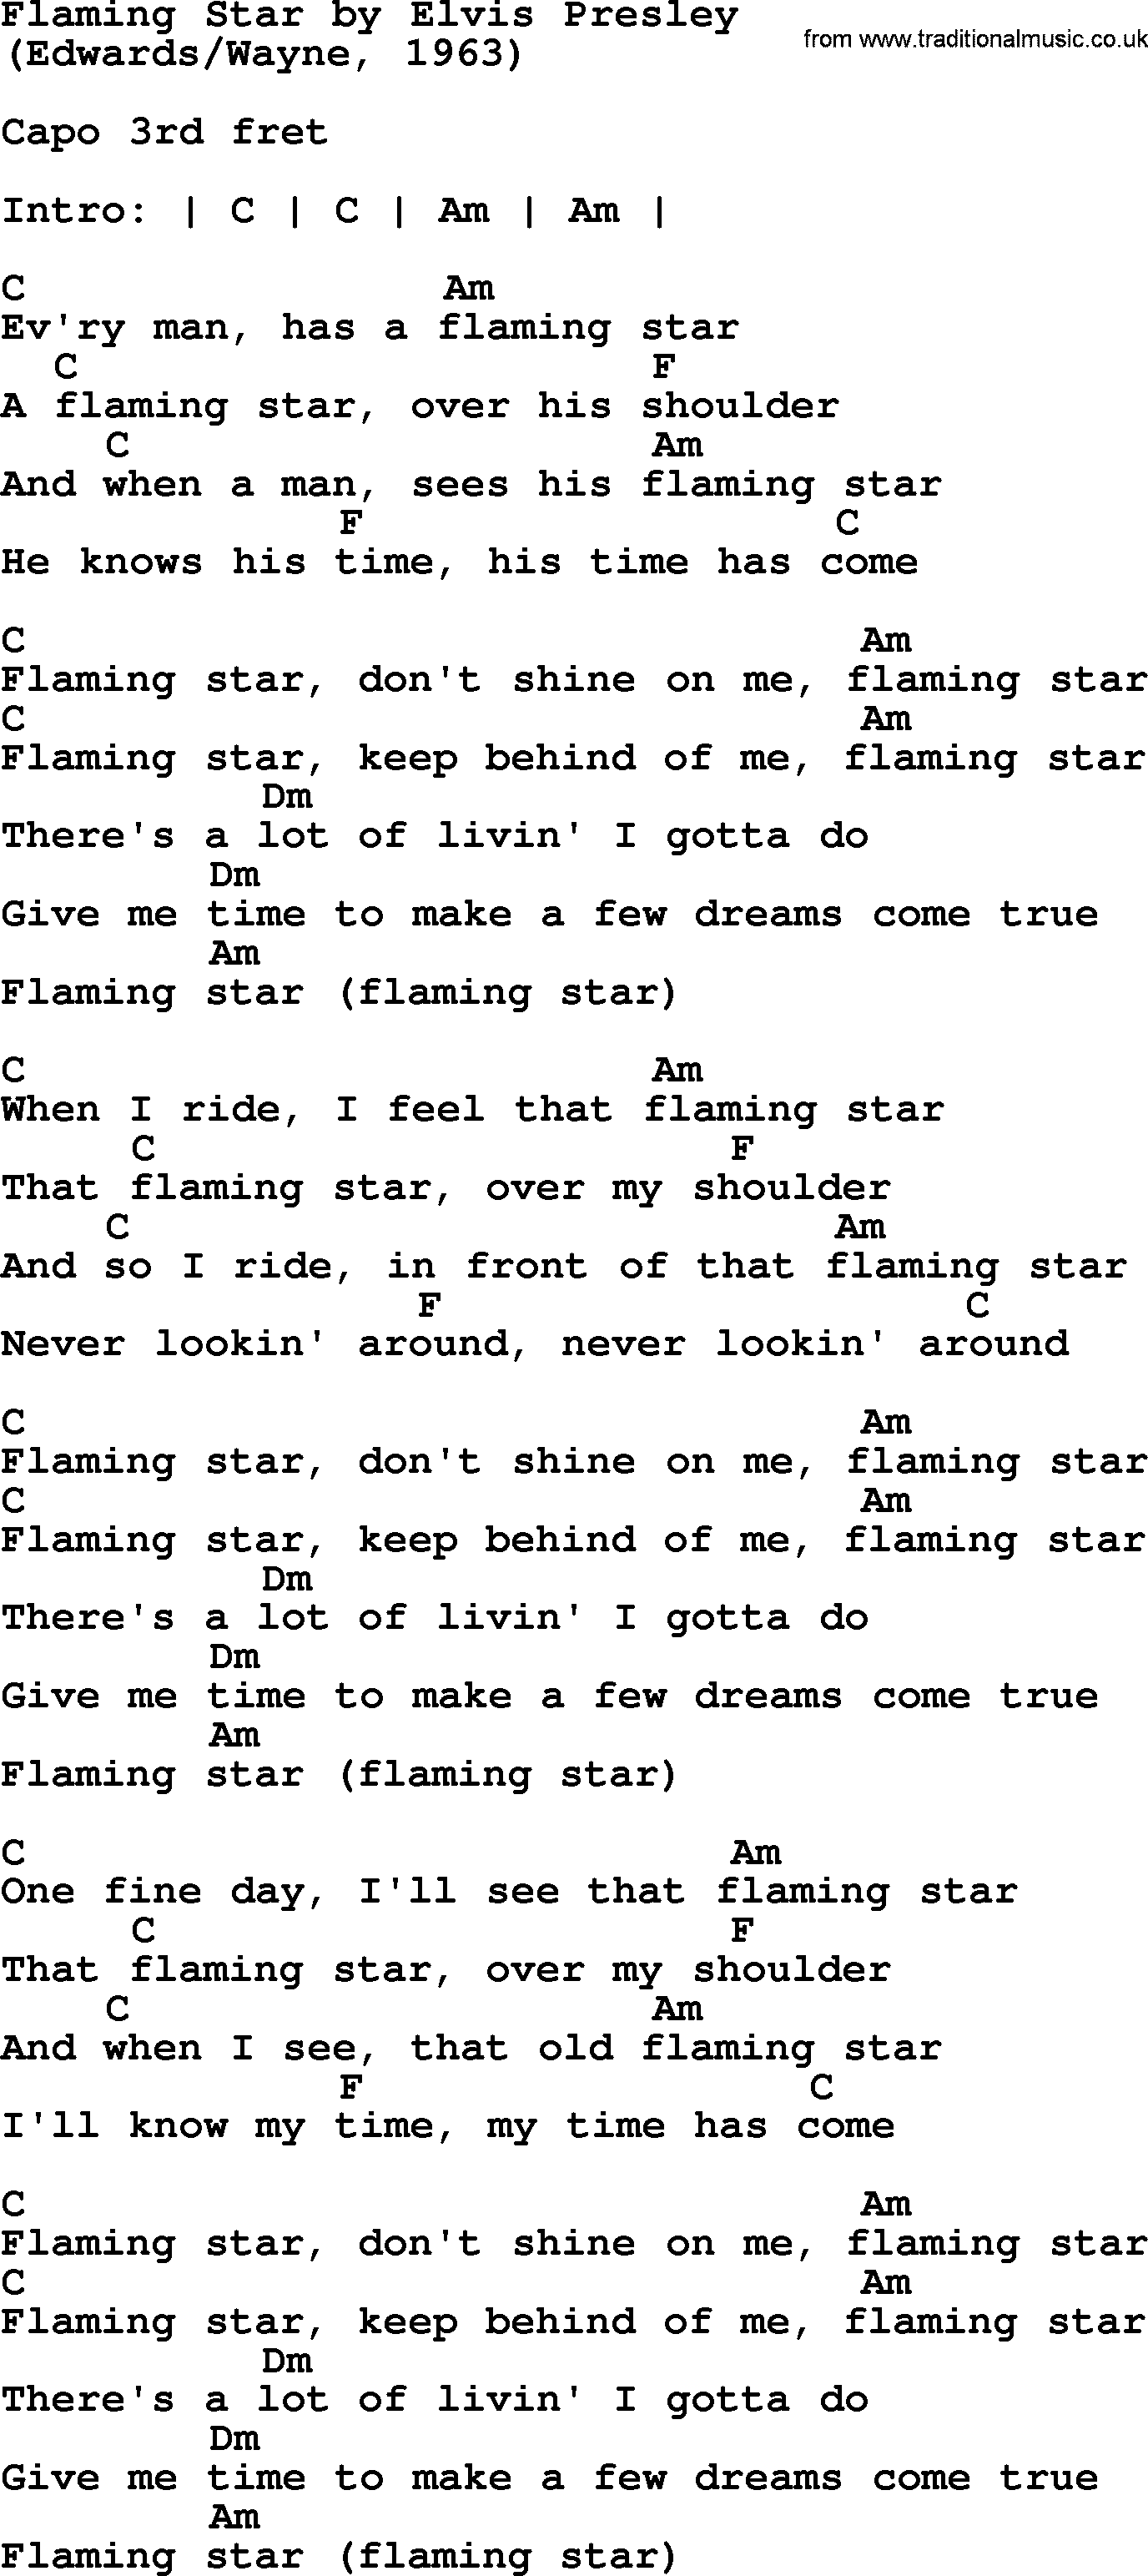 Elvis Presley song: Flaming Star, lyrics and chords